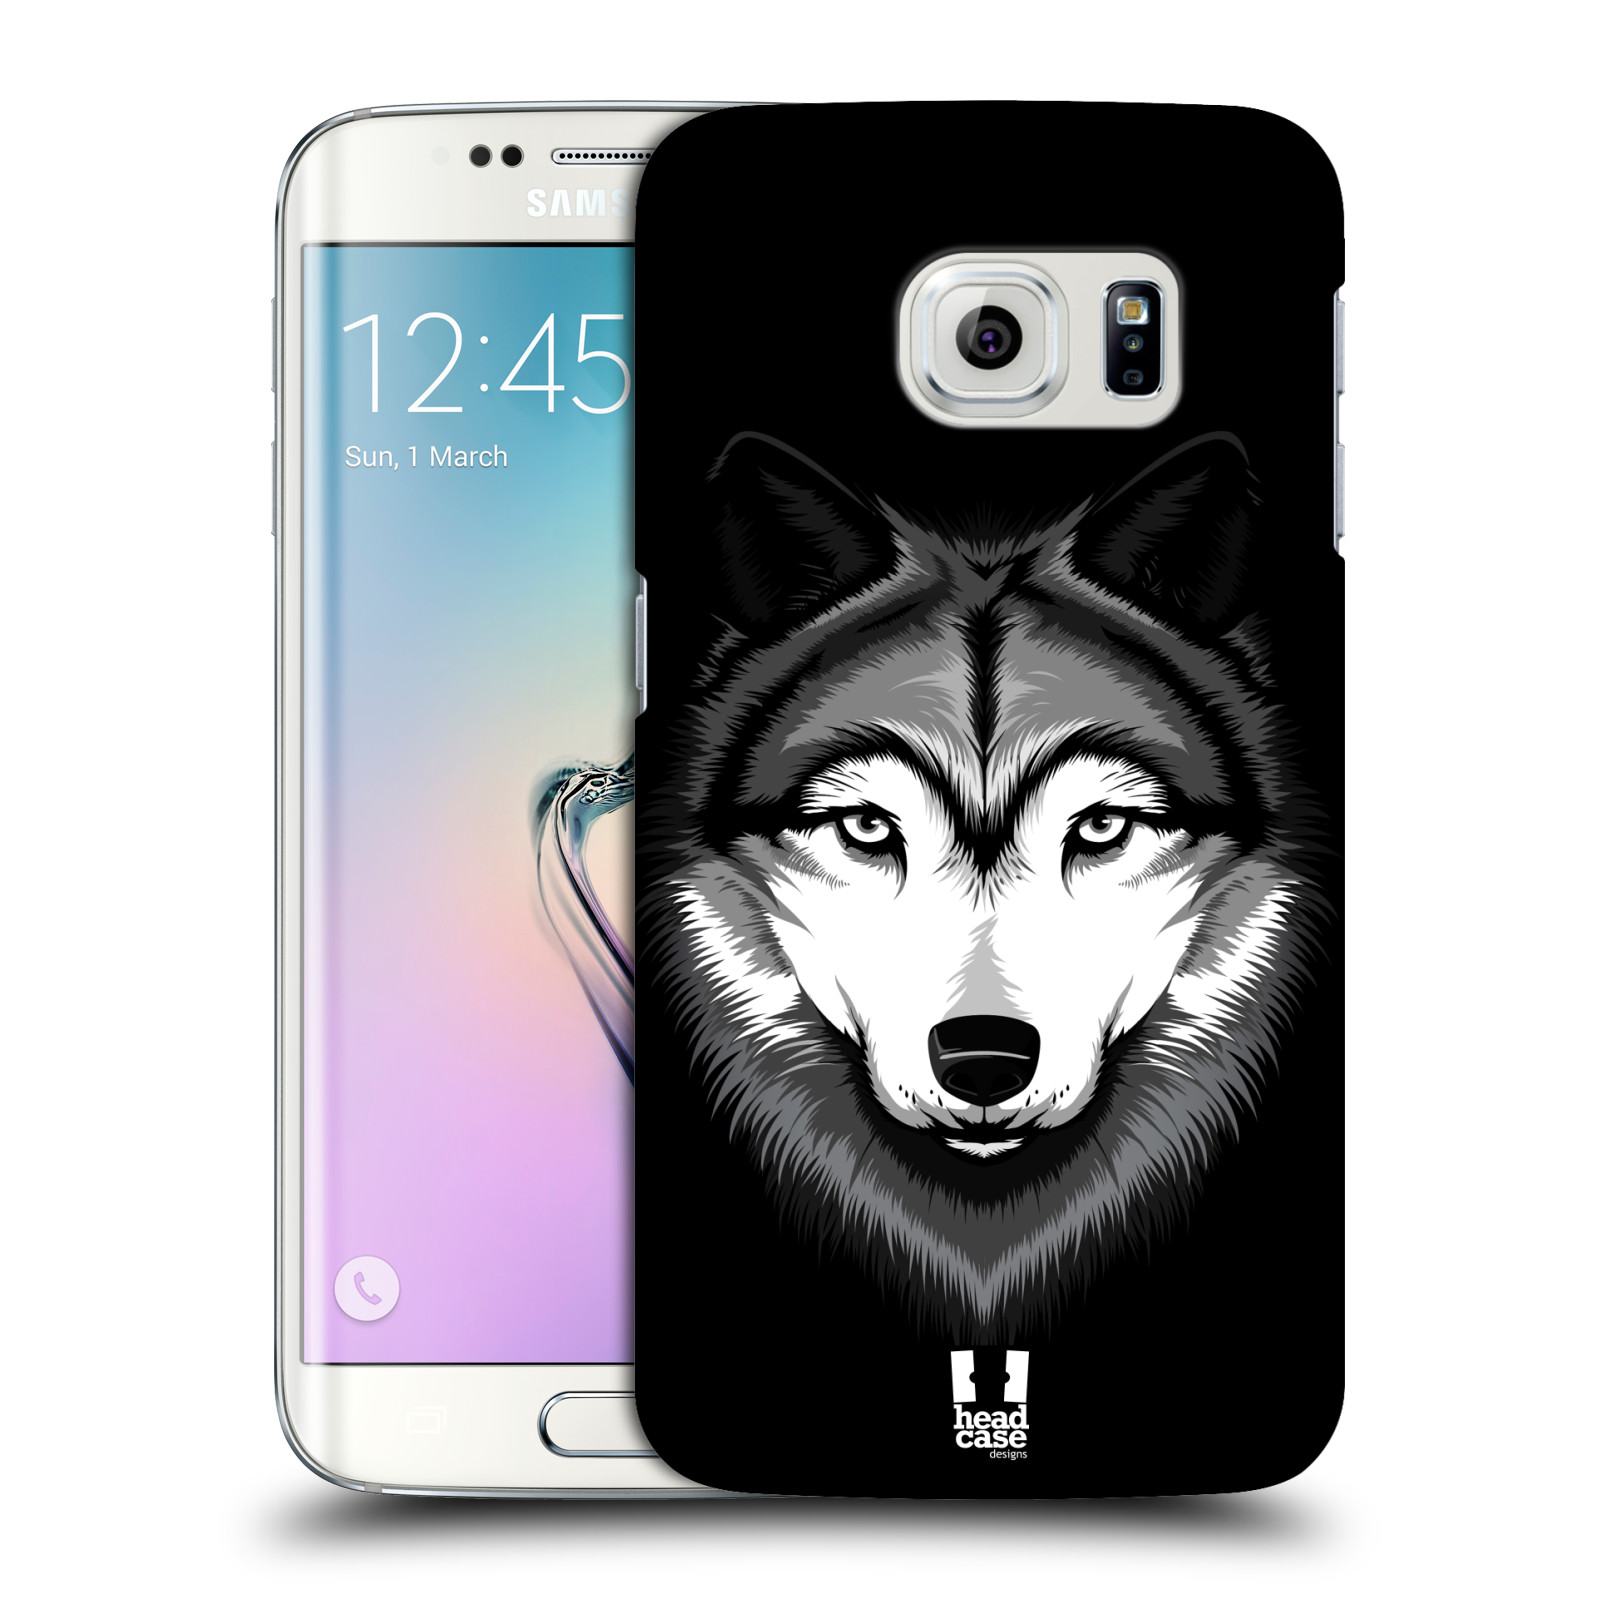 HEAD CASE plastový obal na mobil SAMSUNG Galaxy S6 EDGE (G9250, G925, G925F) vzor Zvíře kreslená tvář 2 vlk